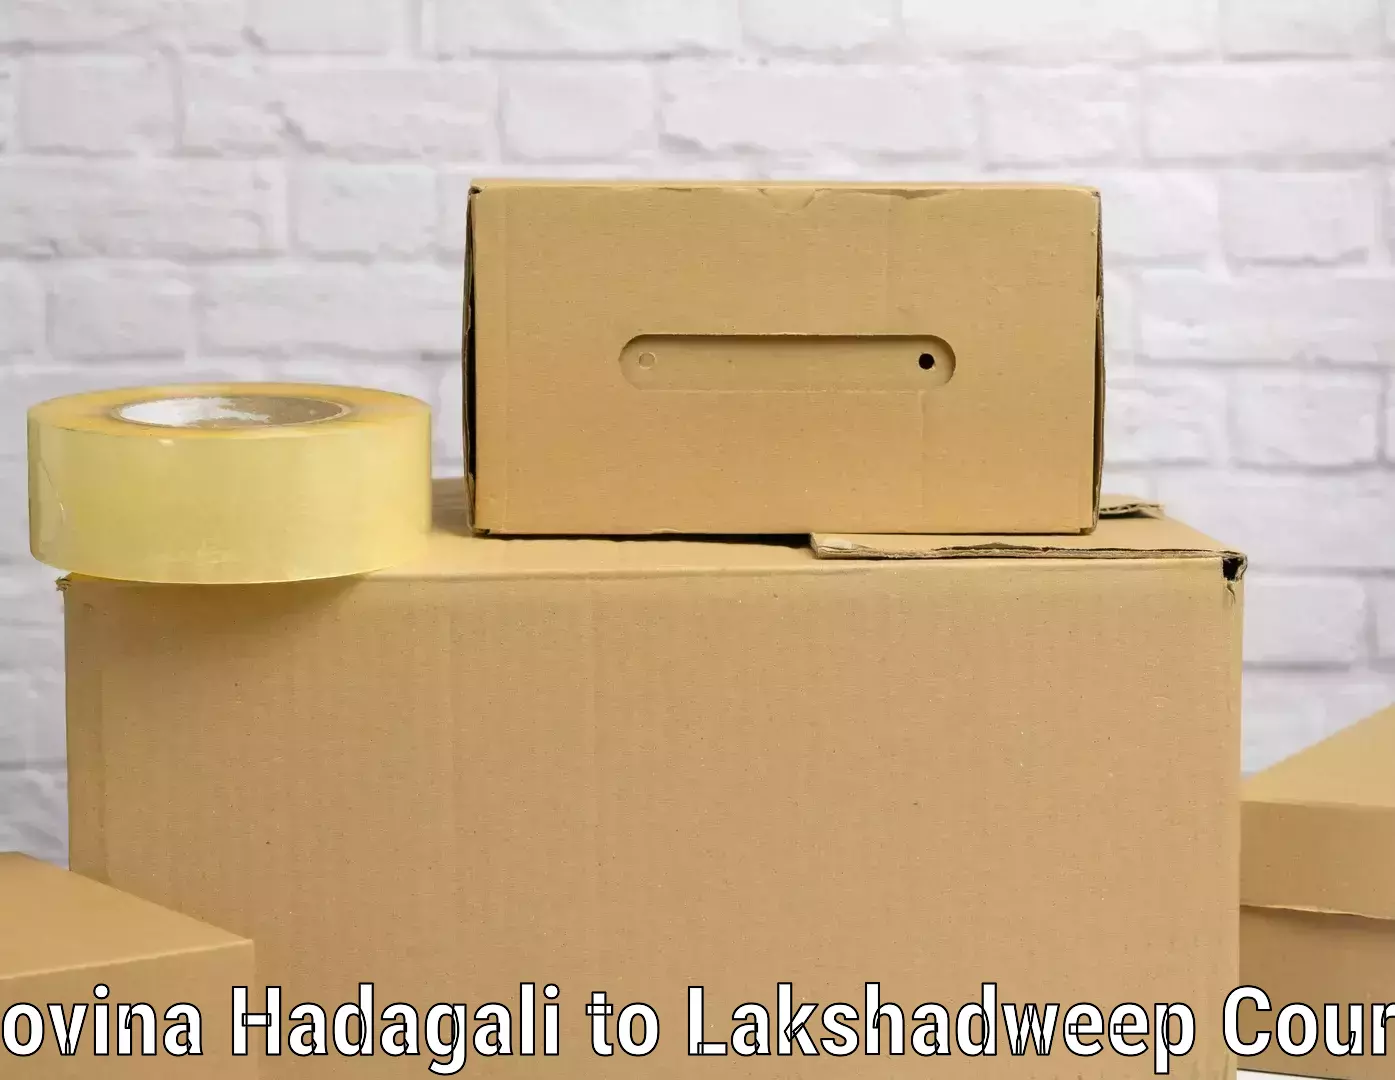 Baggage transport scheduler Hoovina Hadagali to Lakshadweep